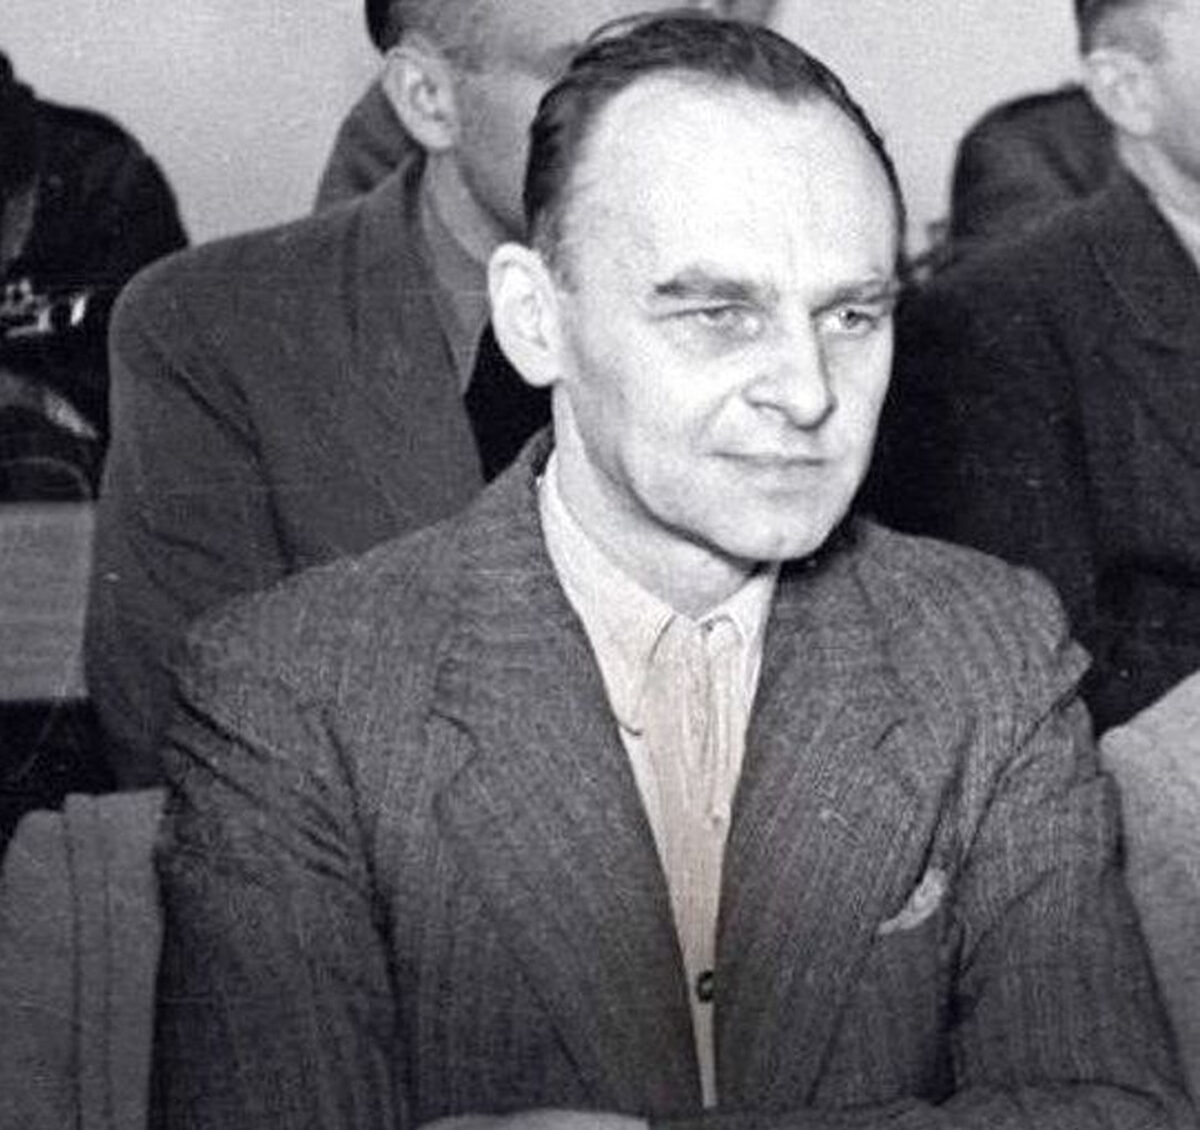 Drama unui polonez care s-a internat voluntar la Auschwitz: căpitanul Witold Pilecki